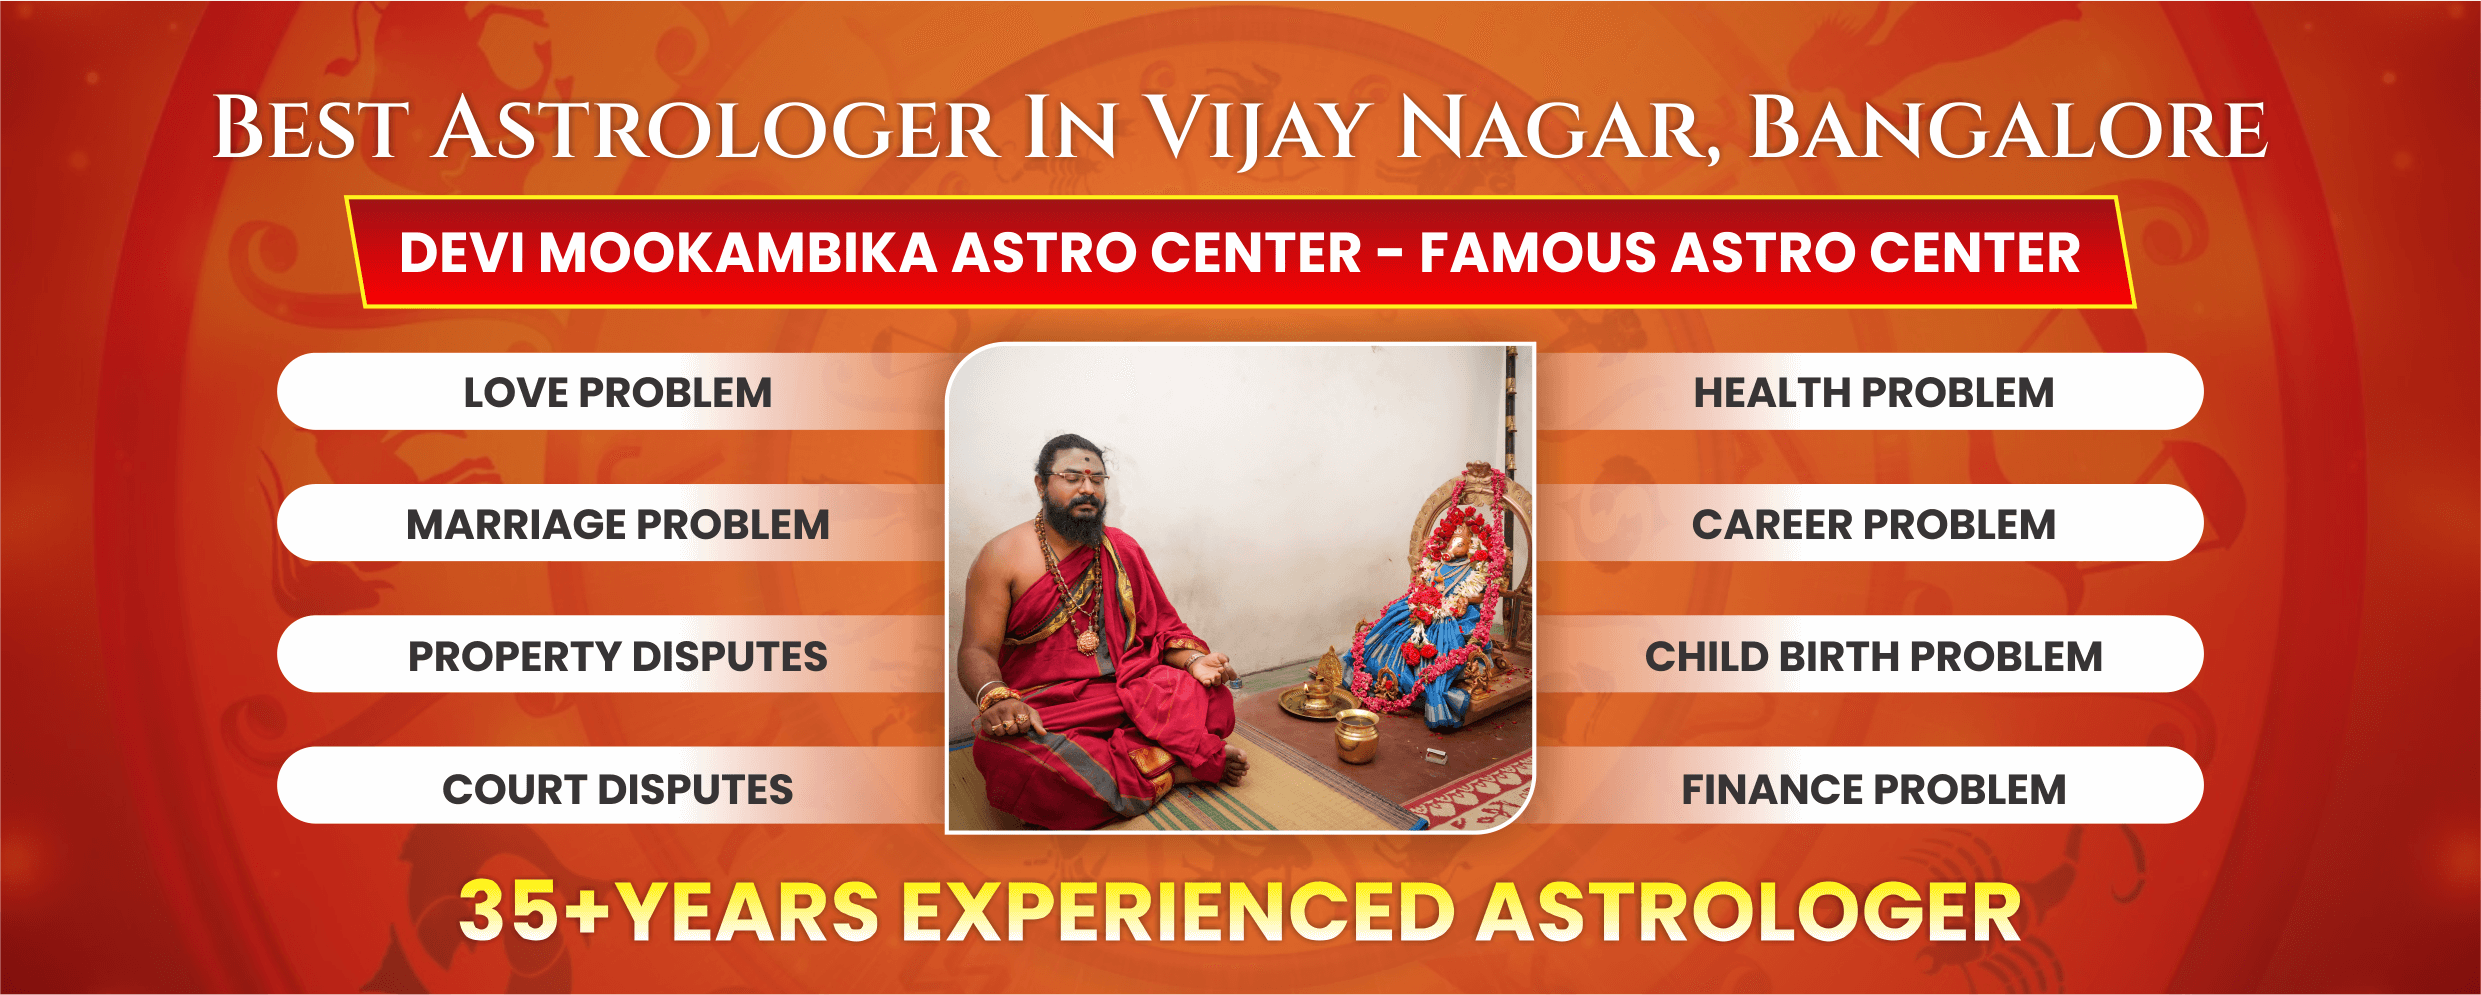 Best Astrologer in Vijay Nagar Bangalore